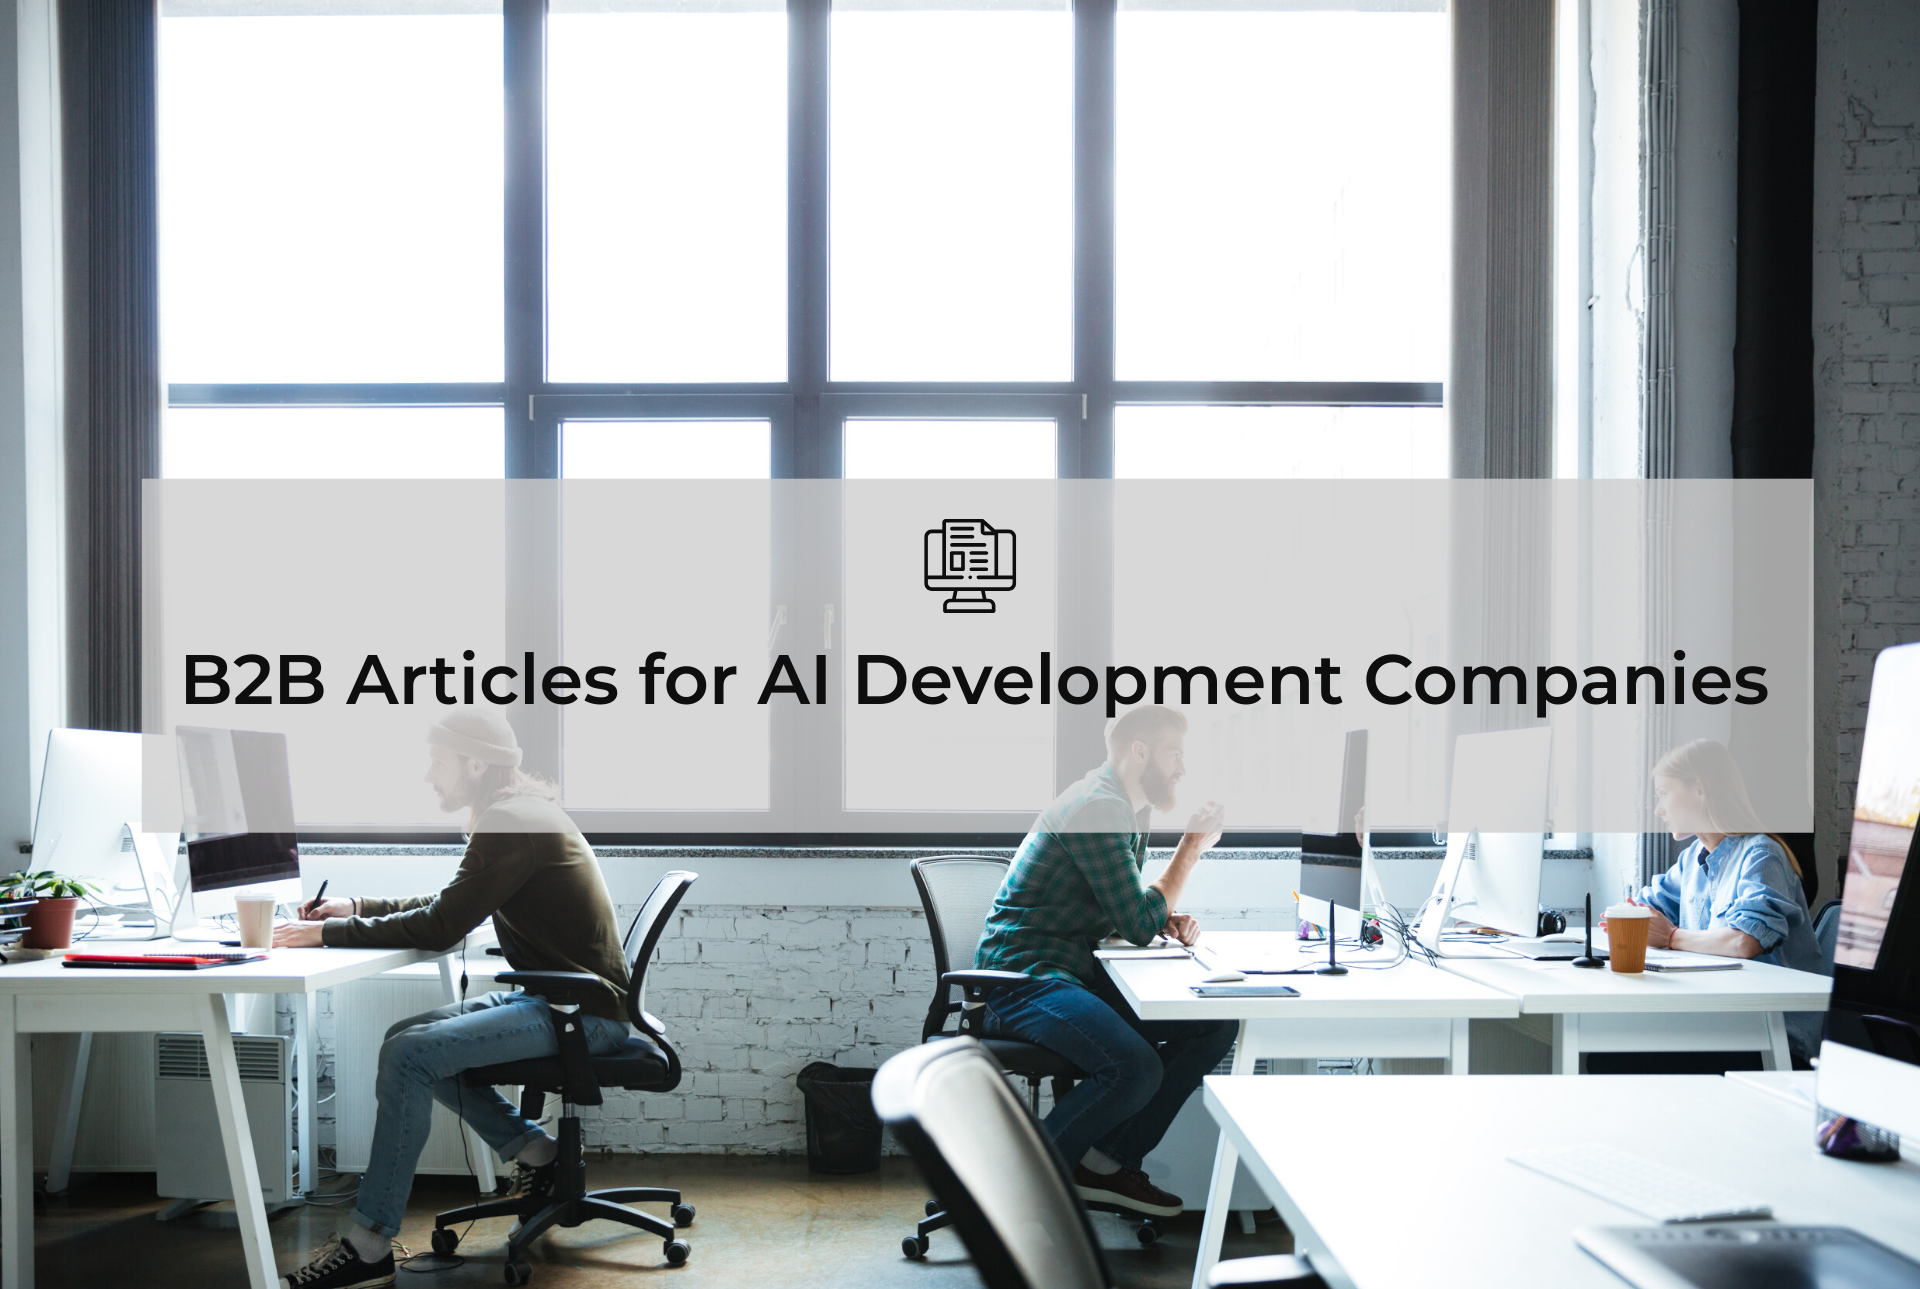 B2B articles for AI development companies